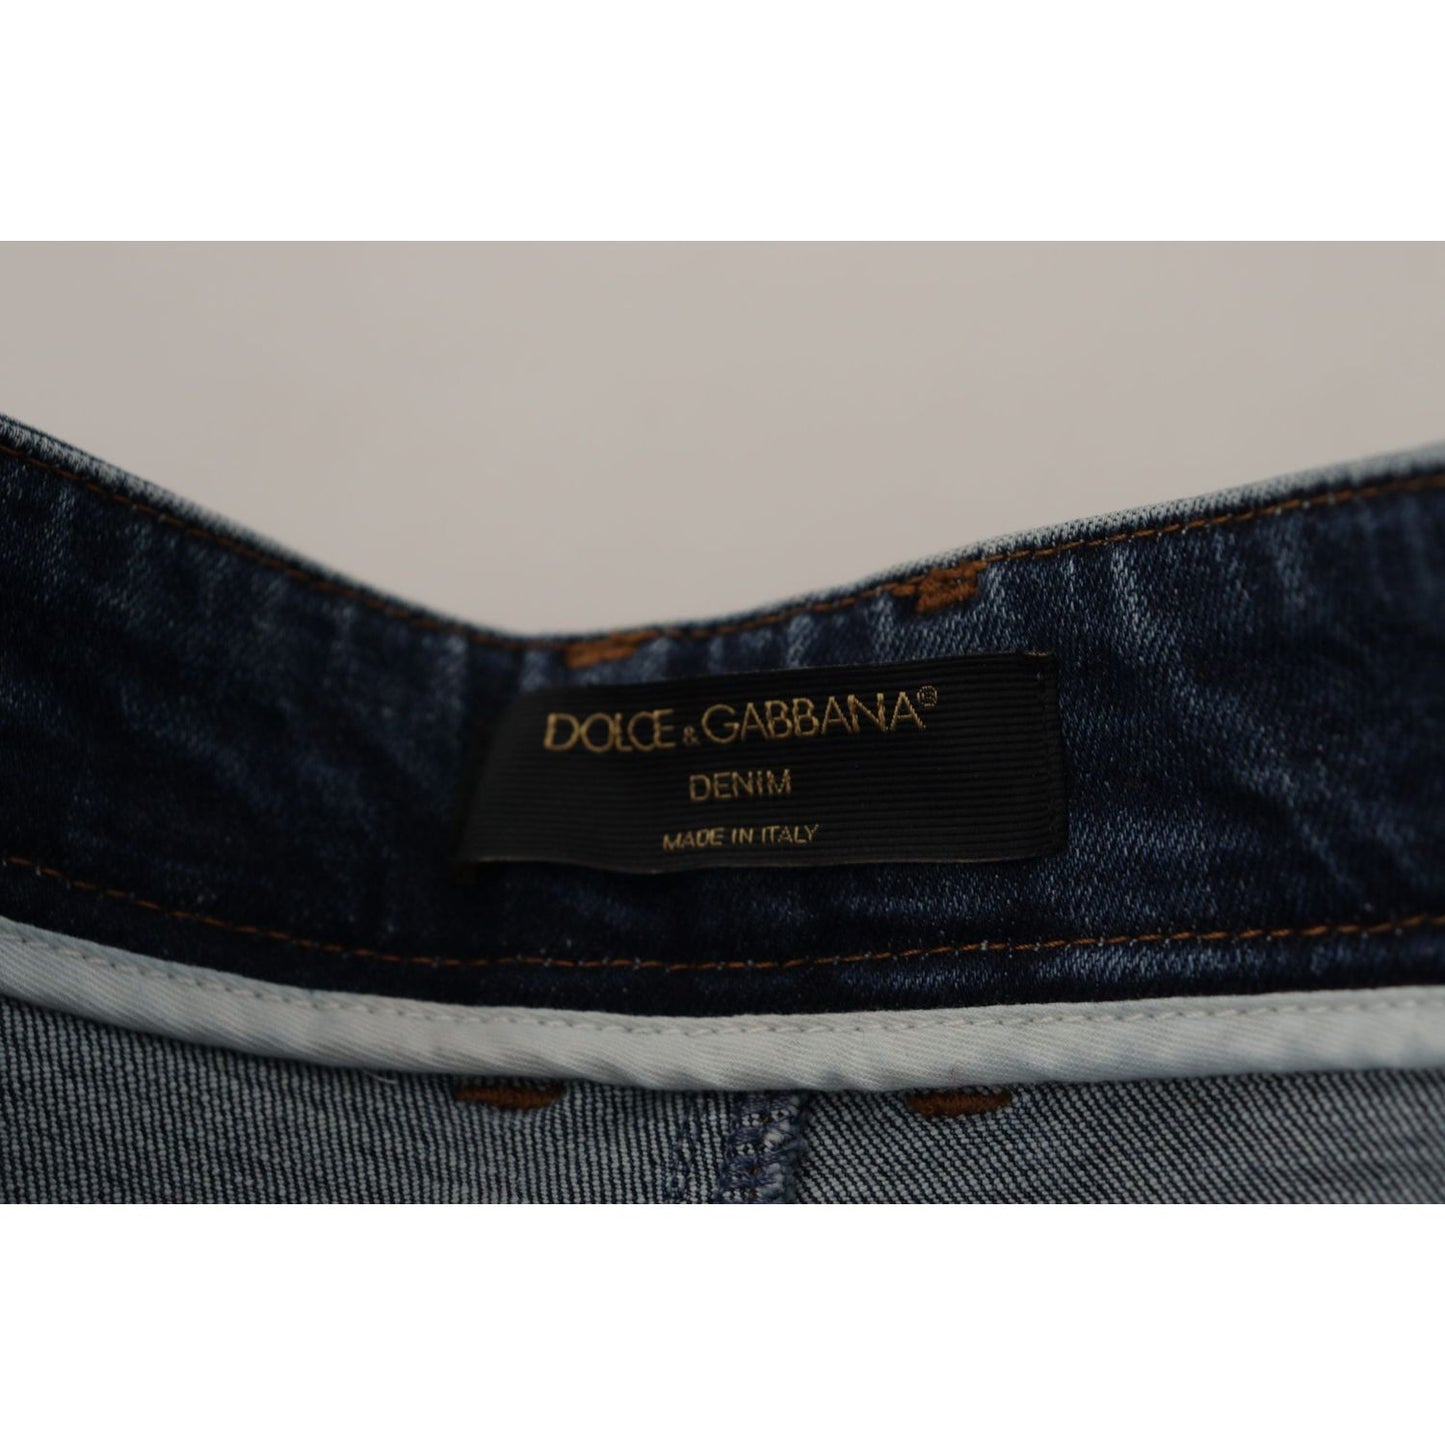 Dolce & GabbanaHigh Waist Skinny Designer Jeans in BlueMcRichard Designer Brands£619.00